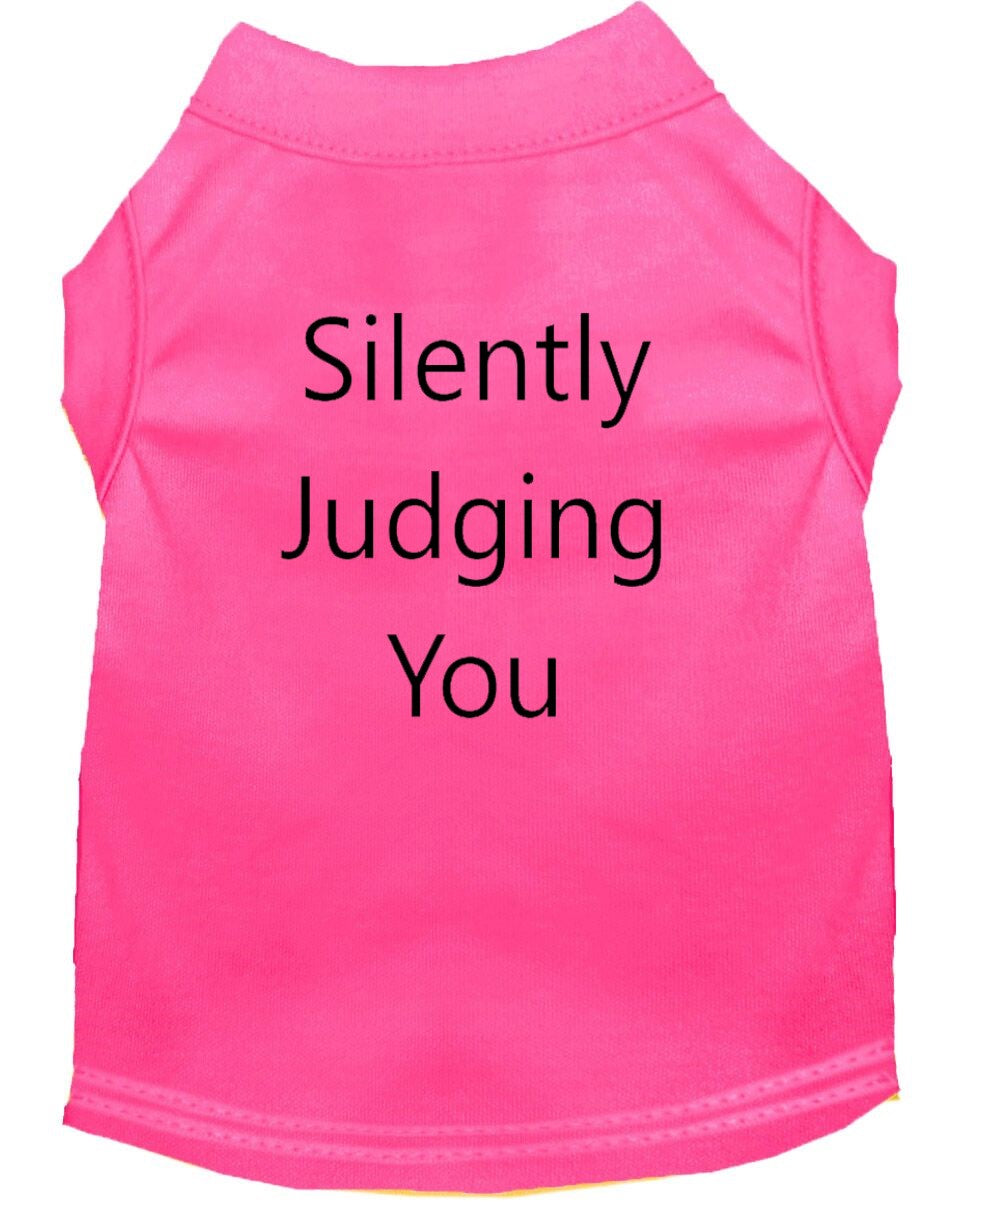 Silently Judging You Dog Shirt Pink